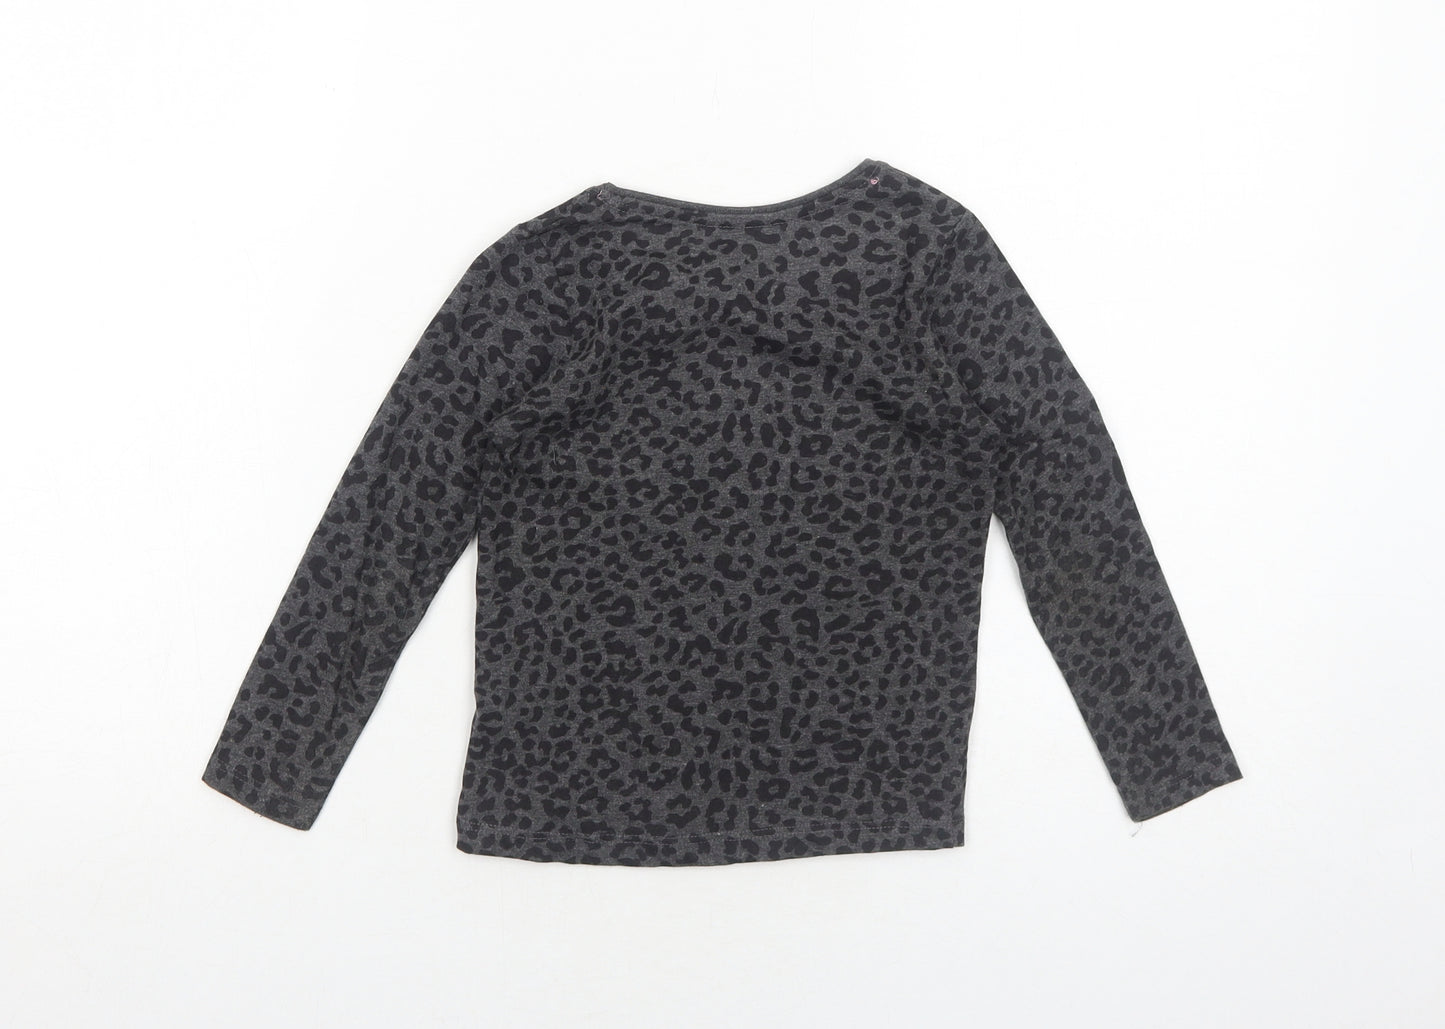 Primark Girls Grey Animal Print Cotton Basic T-Shirt Size 3-4 Years Round Neck Pullover - You Make Me Smile Leopard Print